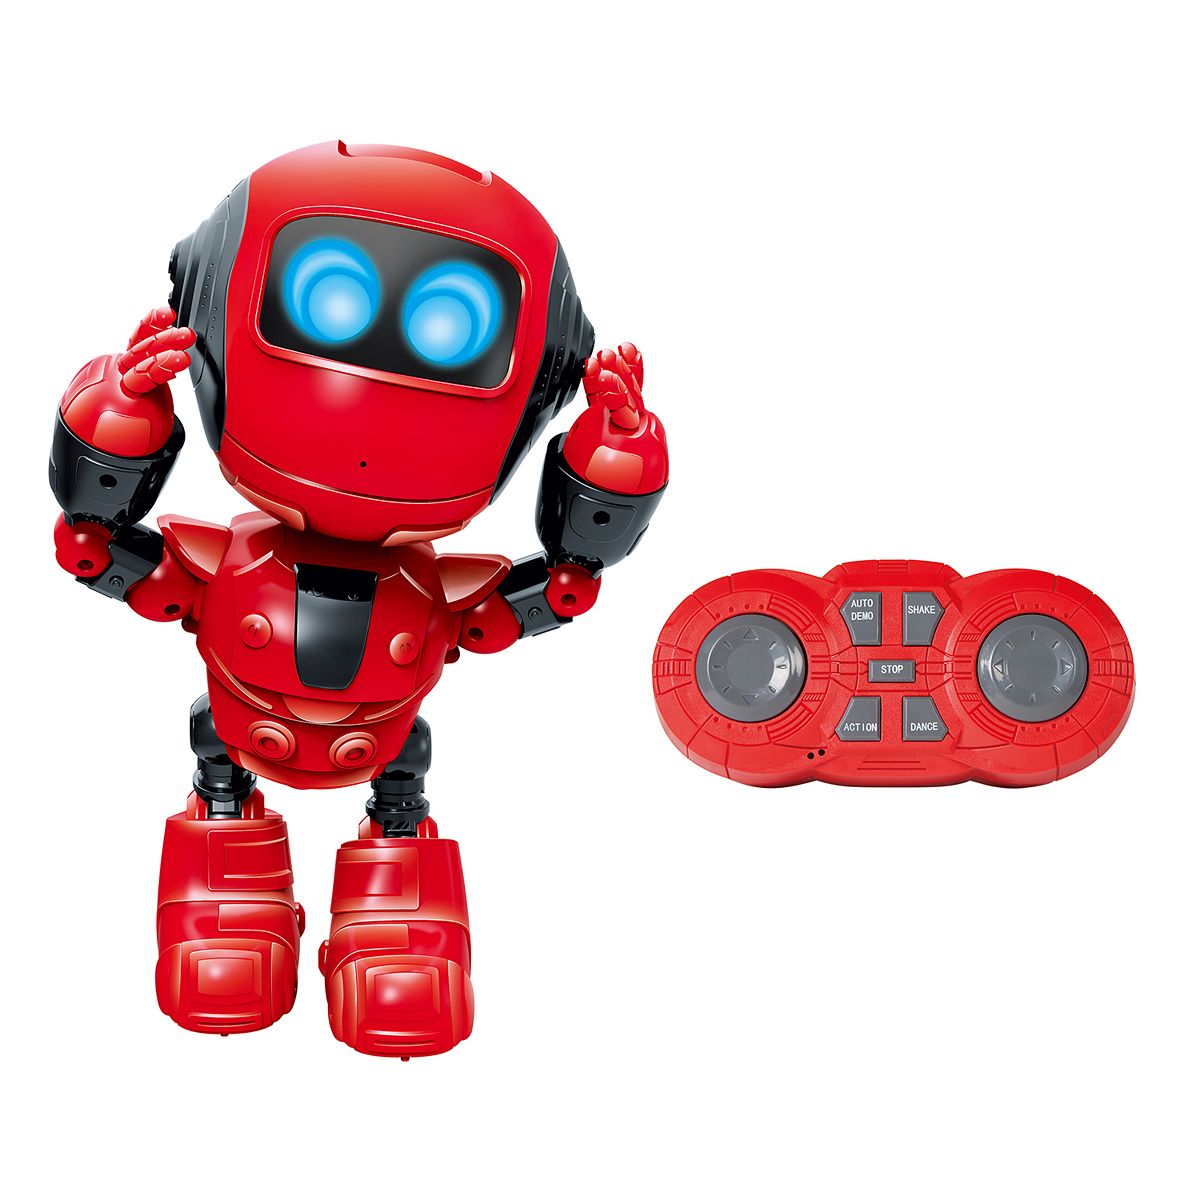 Robot Toys: Shop Fun & Educational Robots for Kids